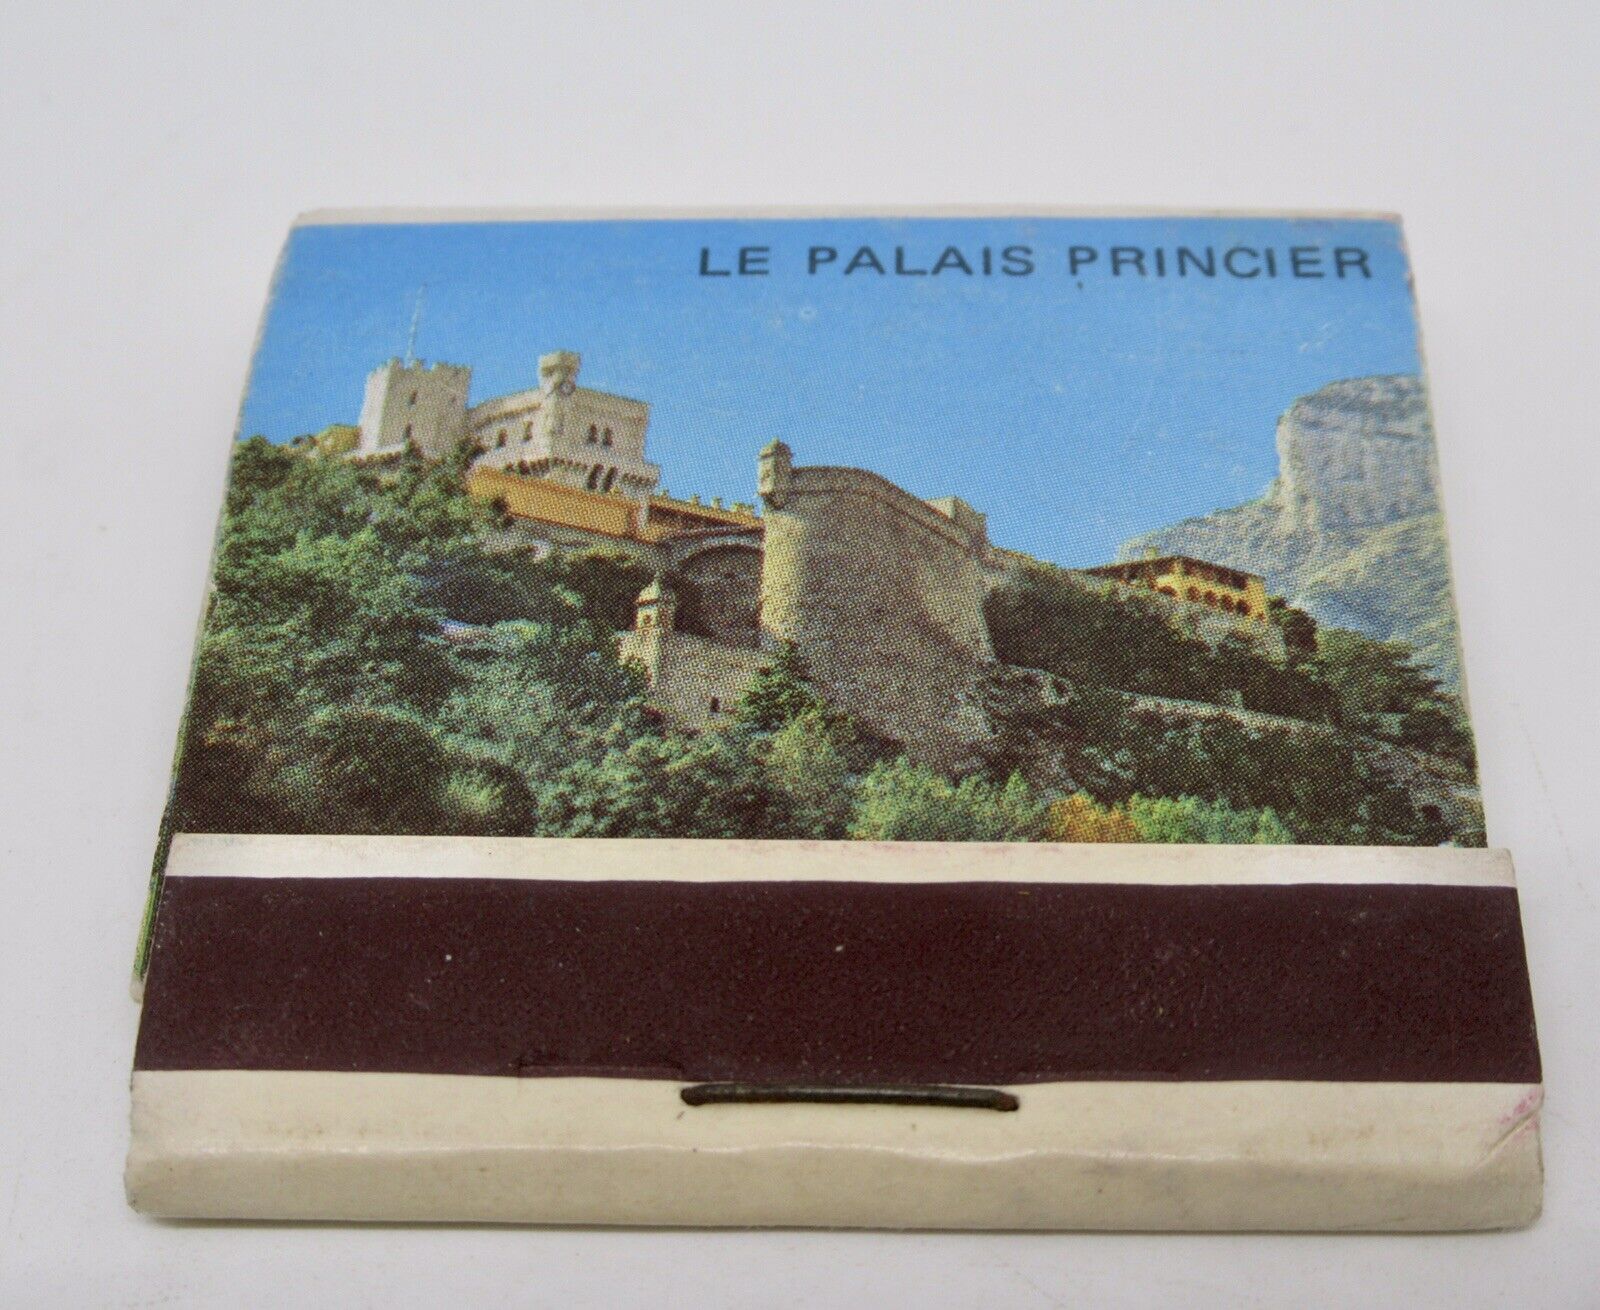 Le Palais (Palace) Princier Monaco French Riviera FULL Matchbook